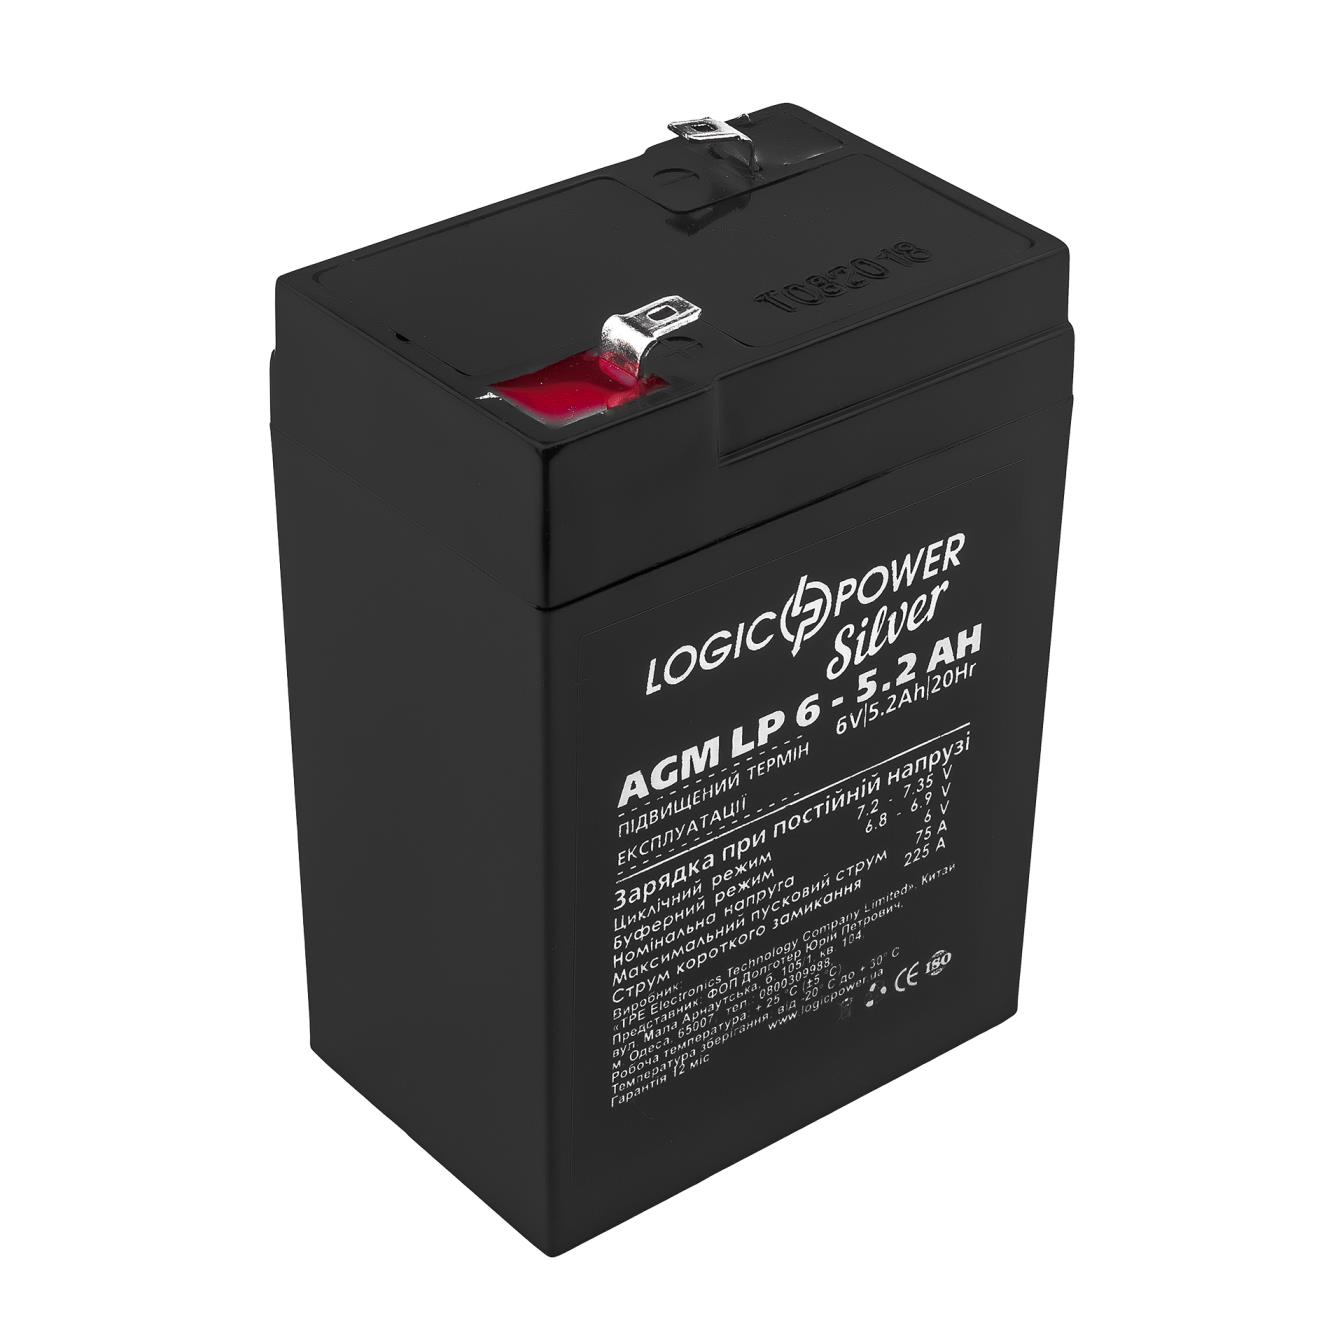 Акумулятор 6 В LogicPower AGM LP 6V - 5.2 Ah Silver (2570)